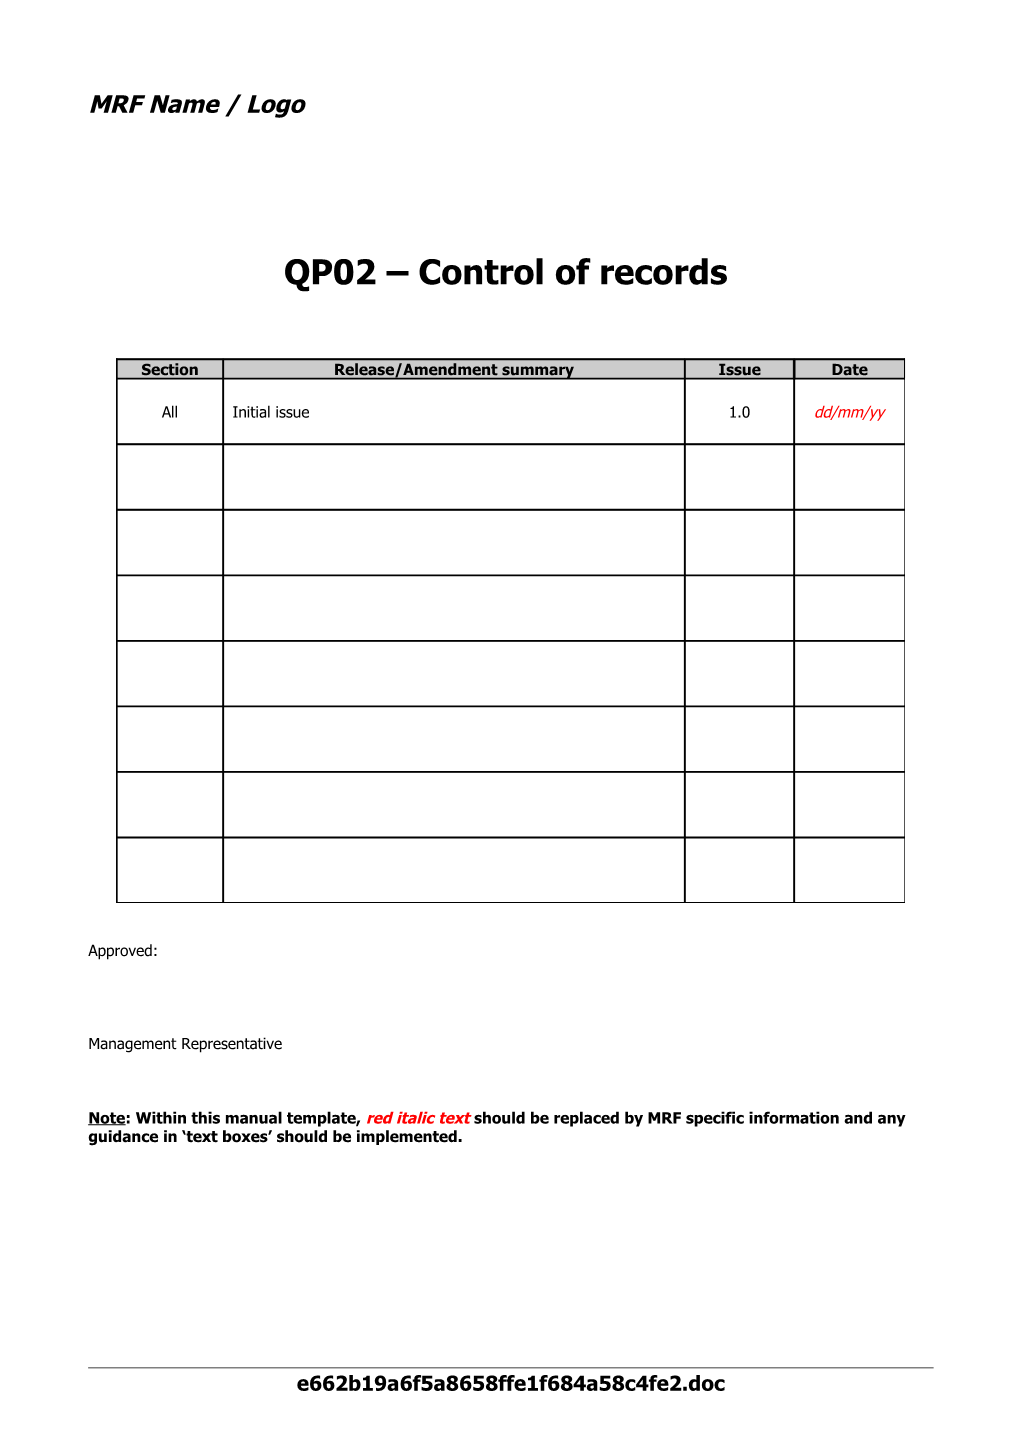 QP02 Control of Records